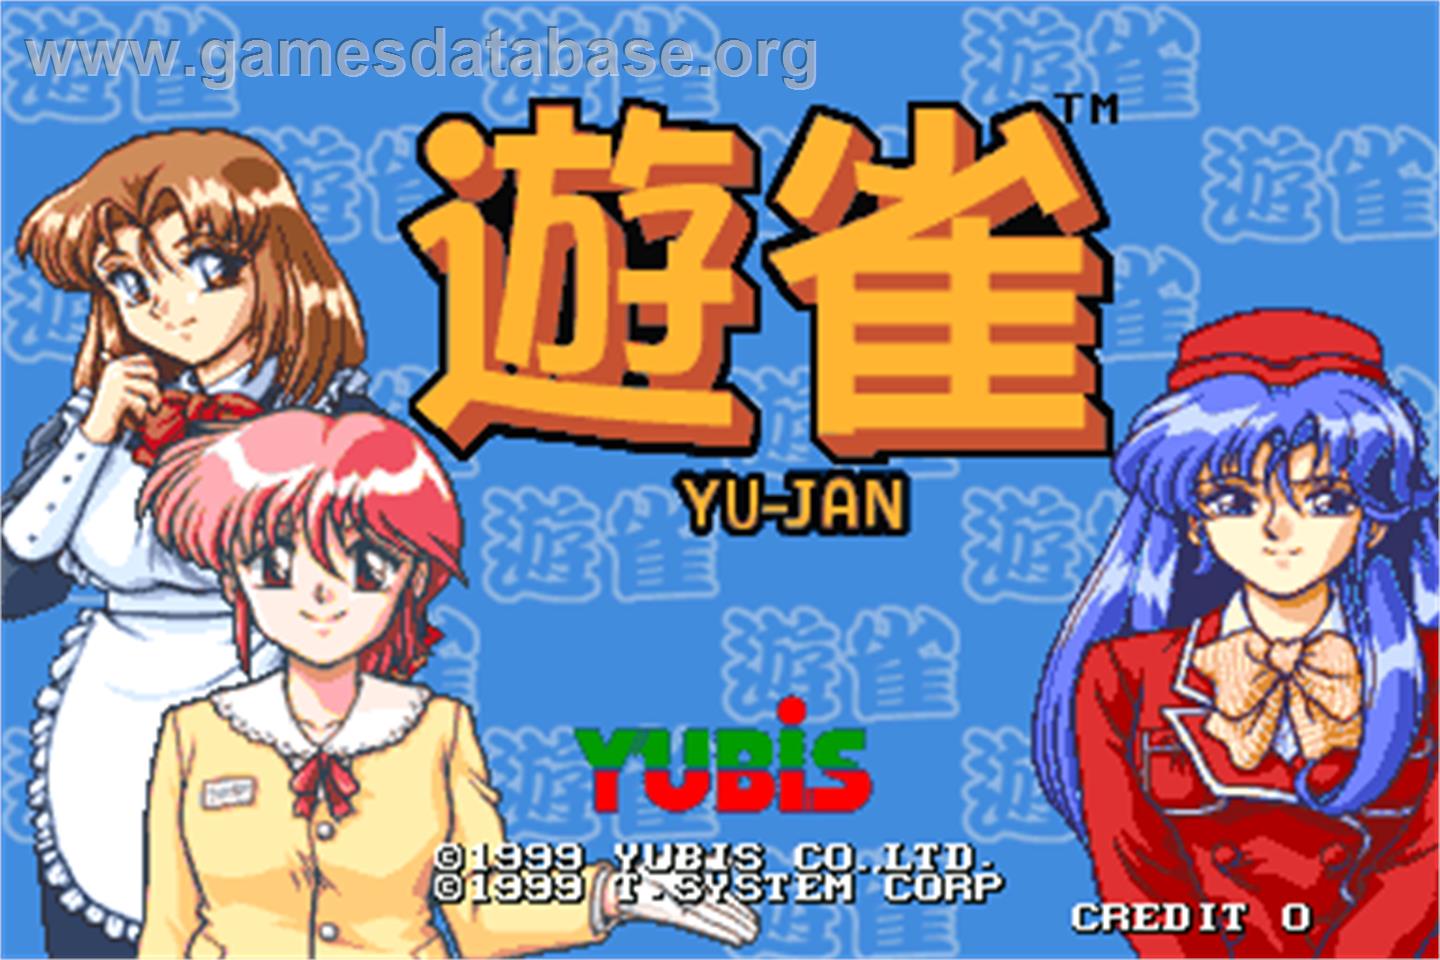 Yu-Jan - Arcade - Artwork - Title Screen